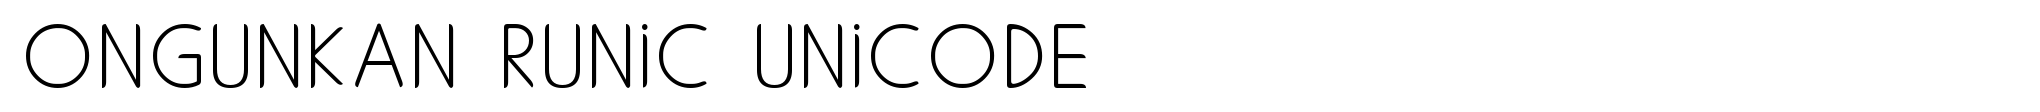 Ongunkan Runic Unicode image